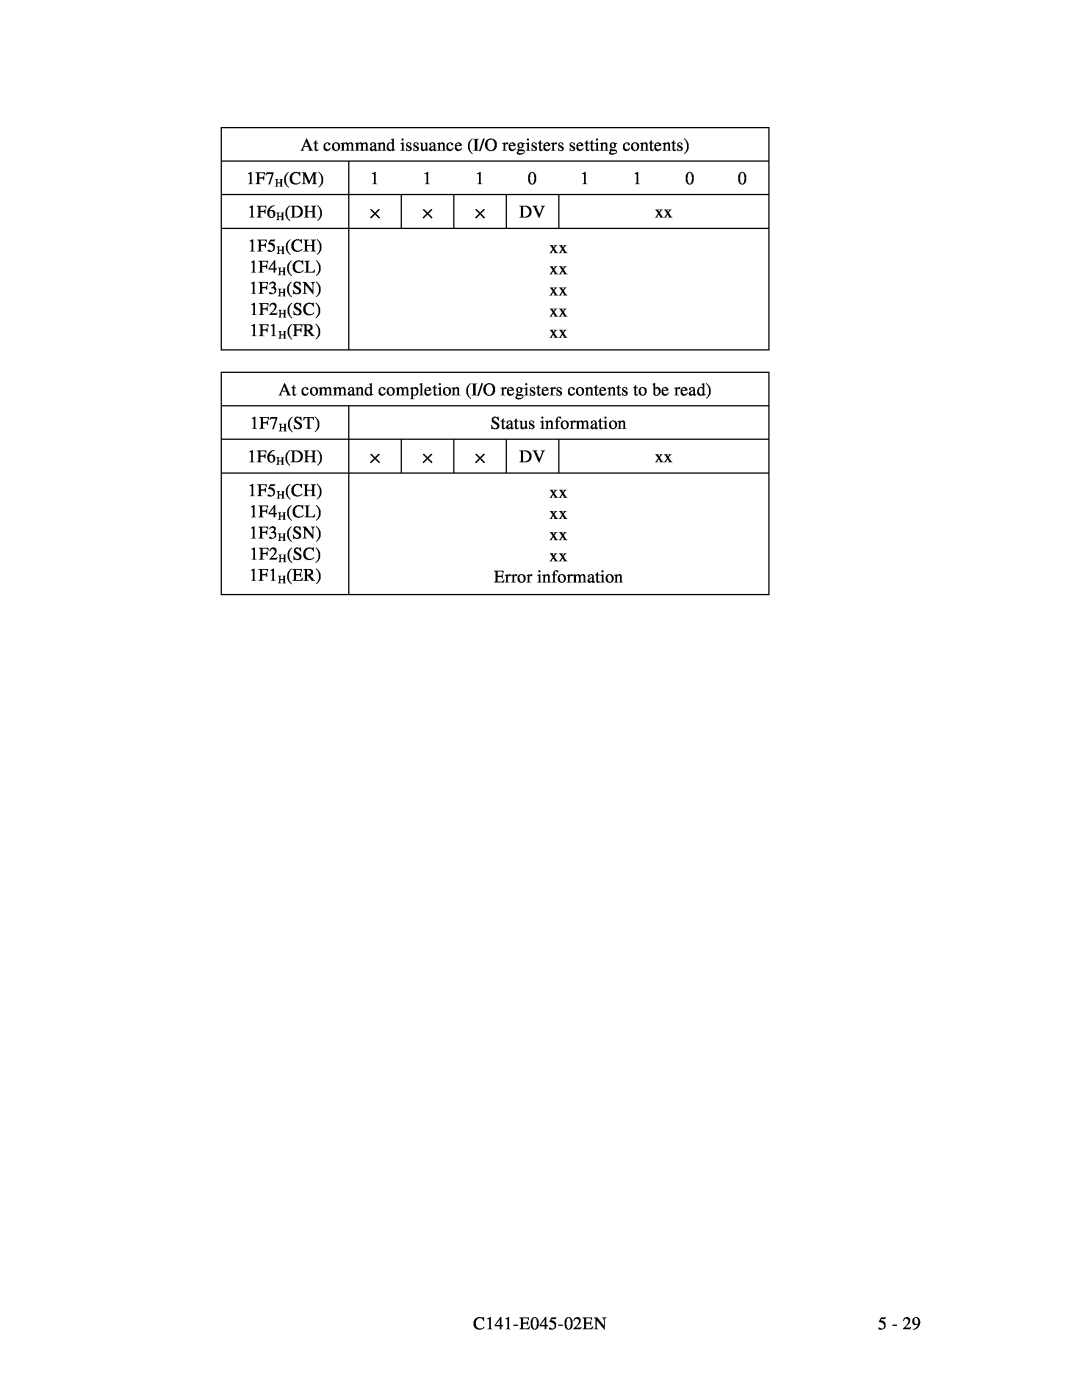 Fujitsu MPB3043AT manual At command issuance I/O registers setting contents, 1F7HCM, 1F6HDH, 1F5HCH, 1F4HCL, 1F3HSN, 1F2HSC 